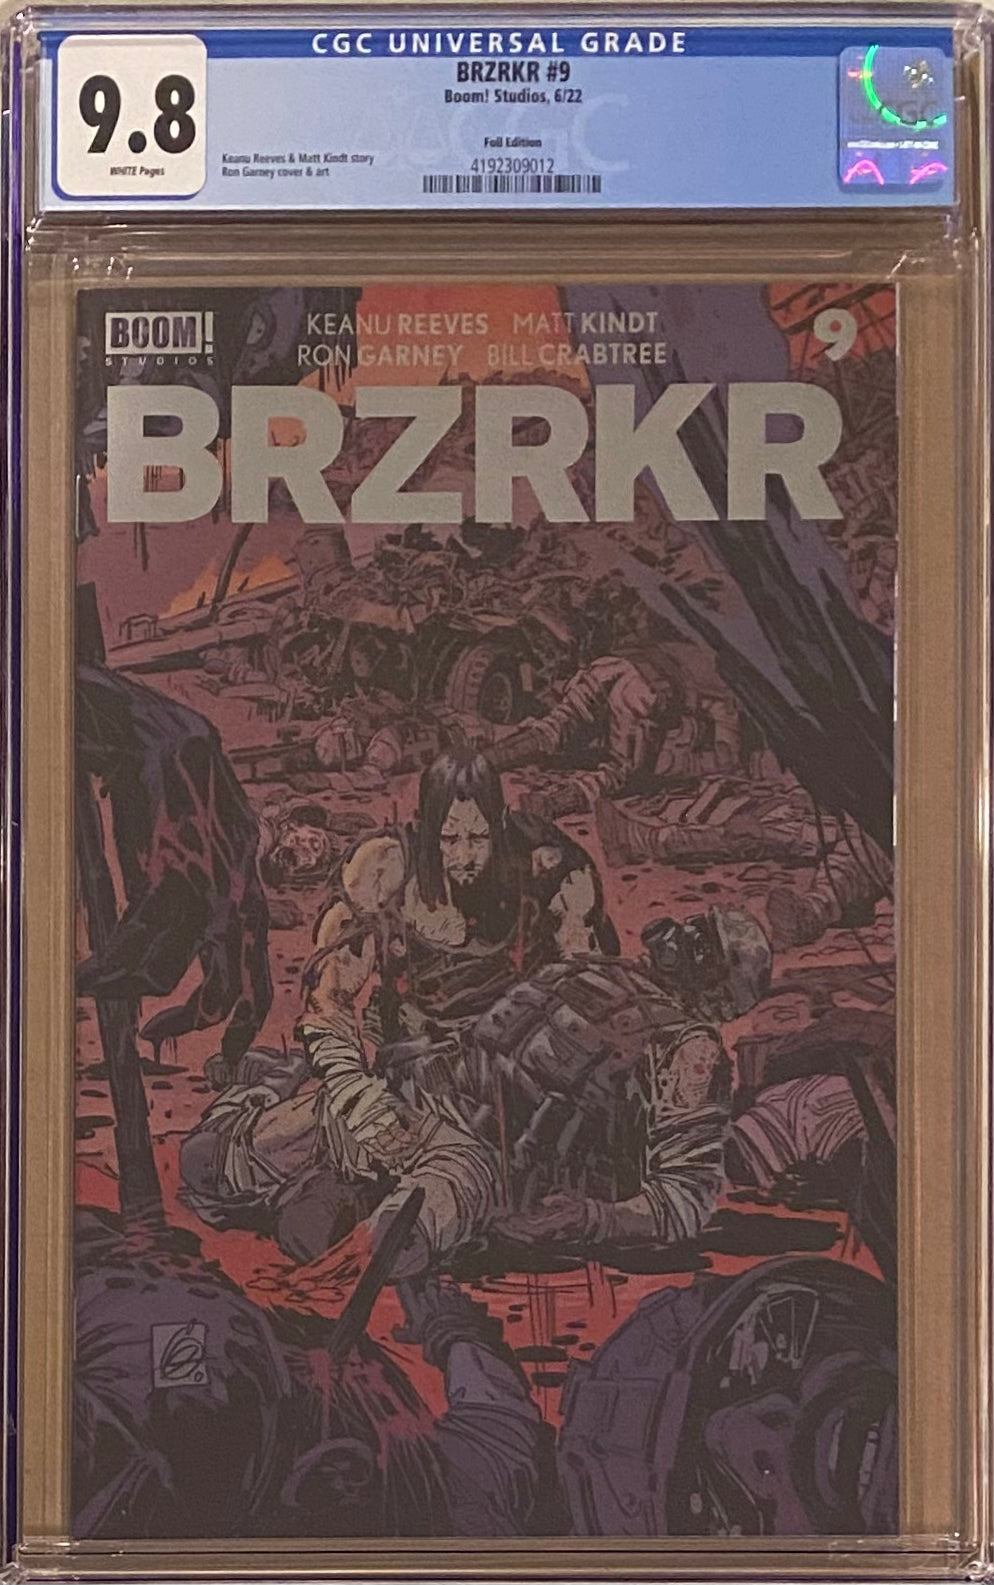 BRZRKR #9 Cover C Garney Foil Variant CGC 9.8 (Berzerker)